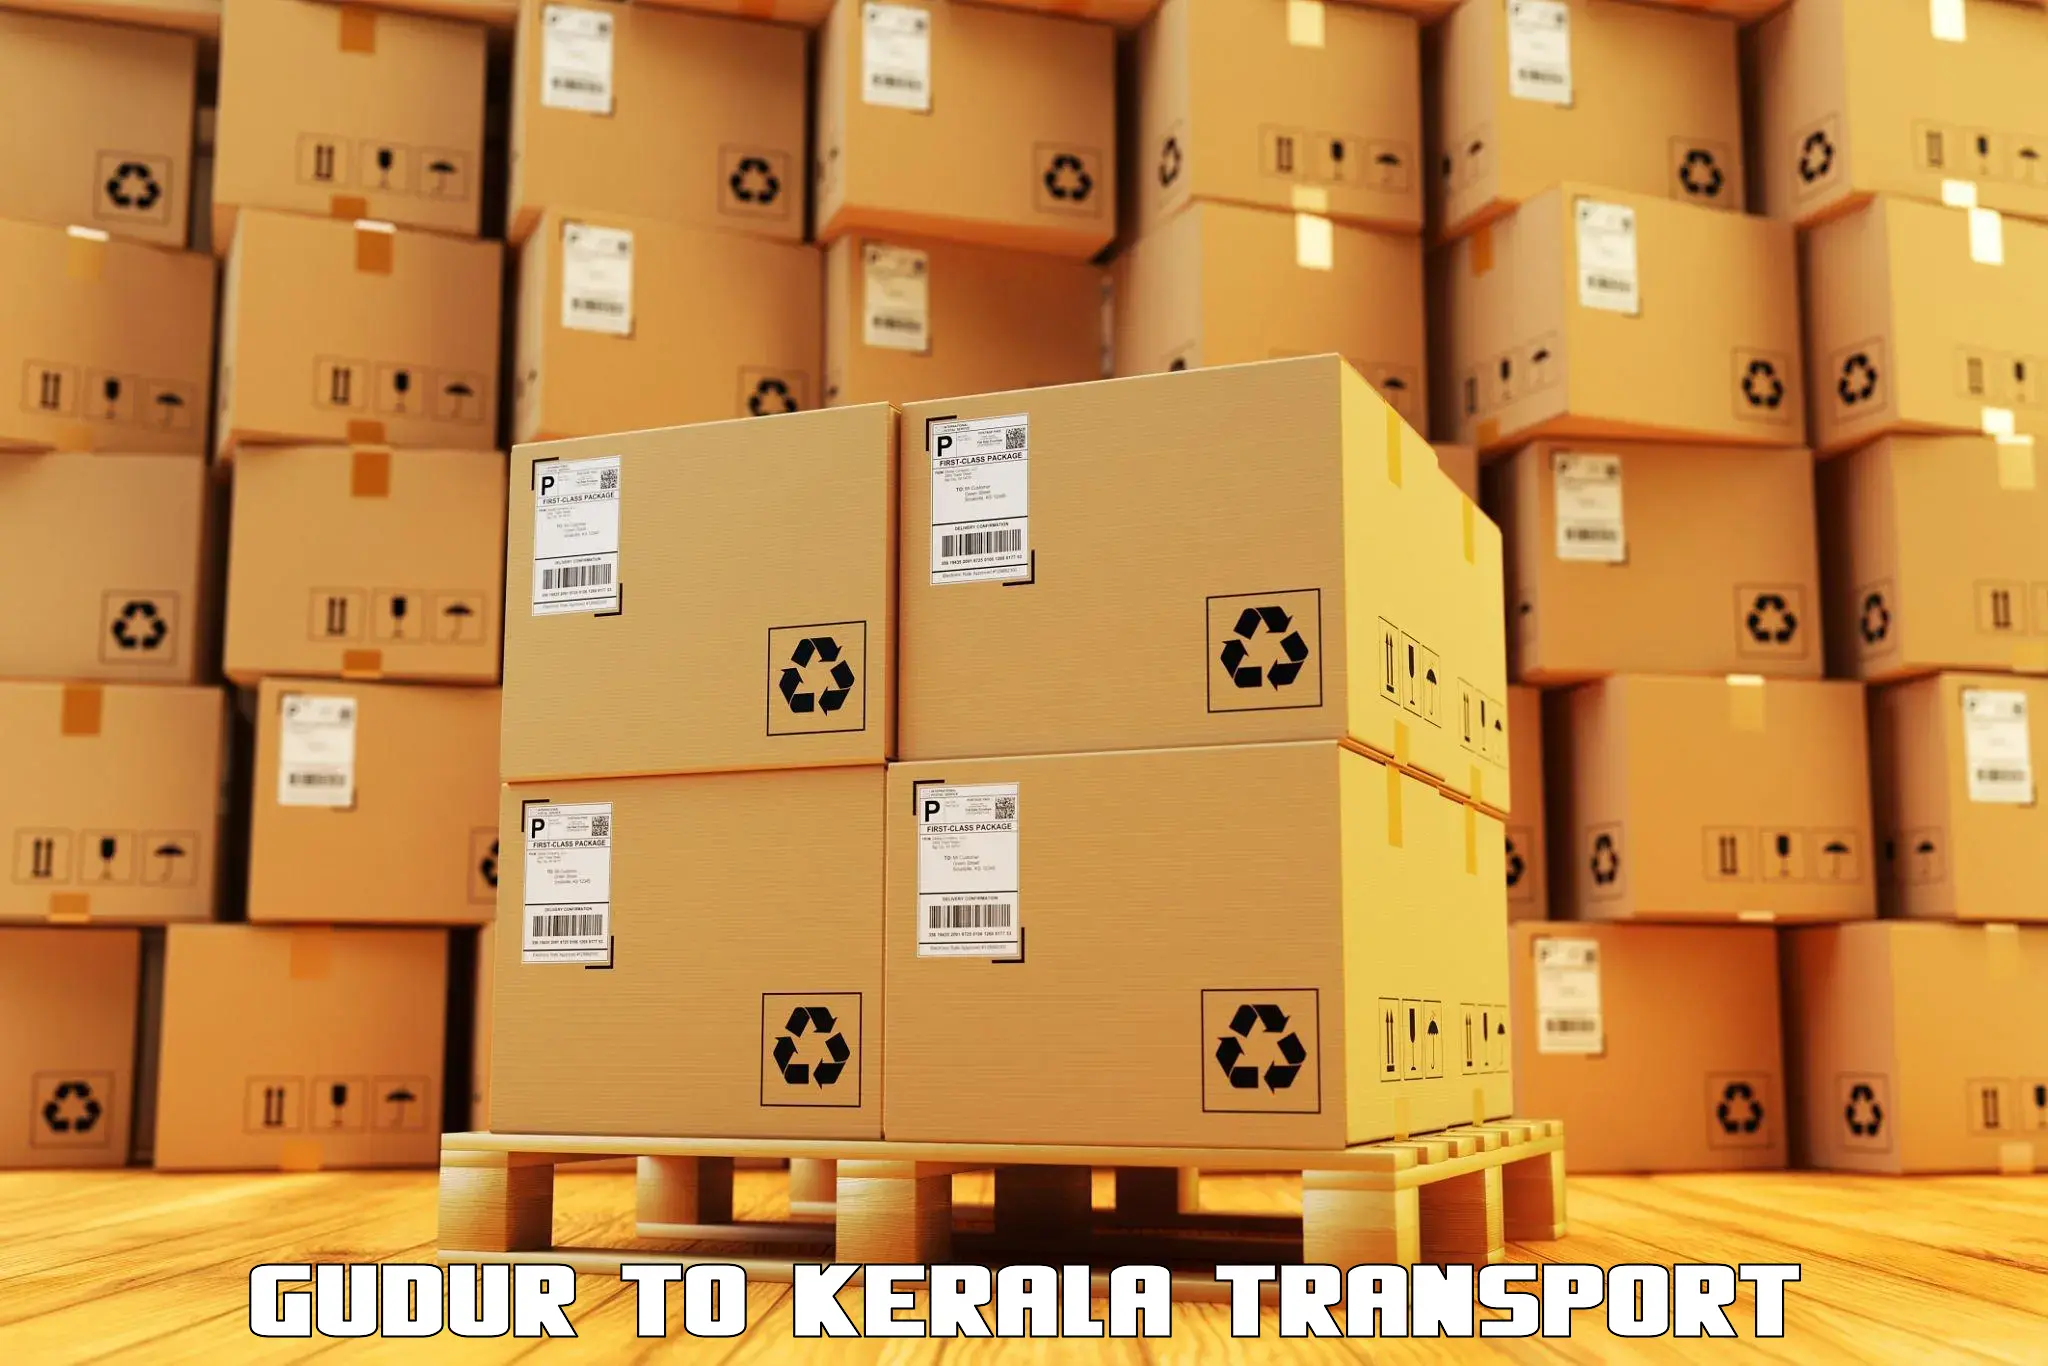 Truck transport companies in India in Gudur to Kadanad